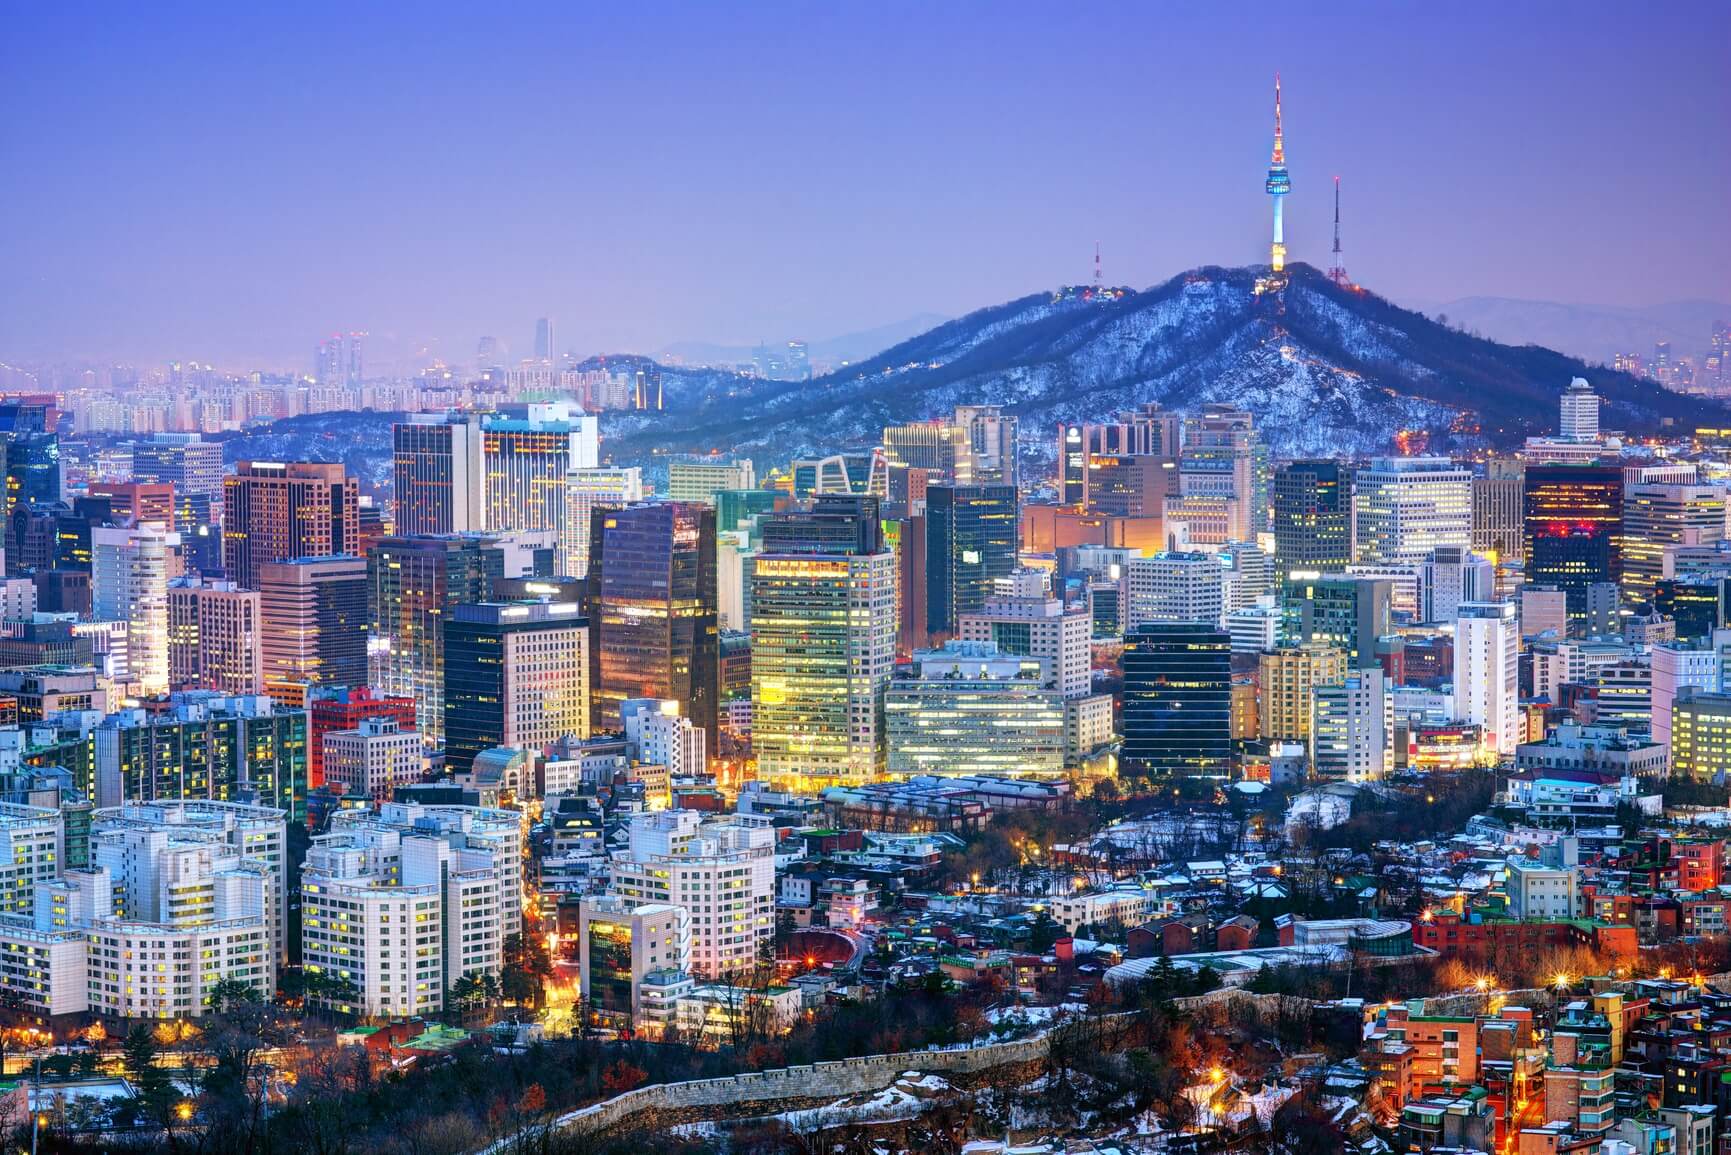 Flight deals from Munich or Frankfurt, Germany to Seoul, South Korea | Secret Flying